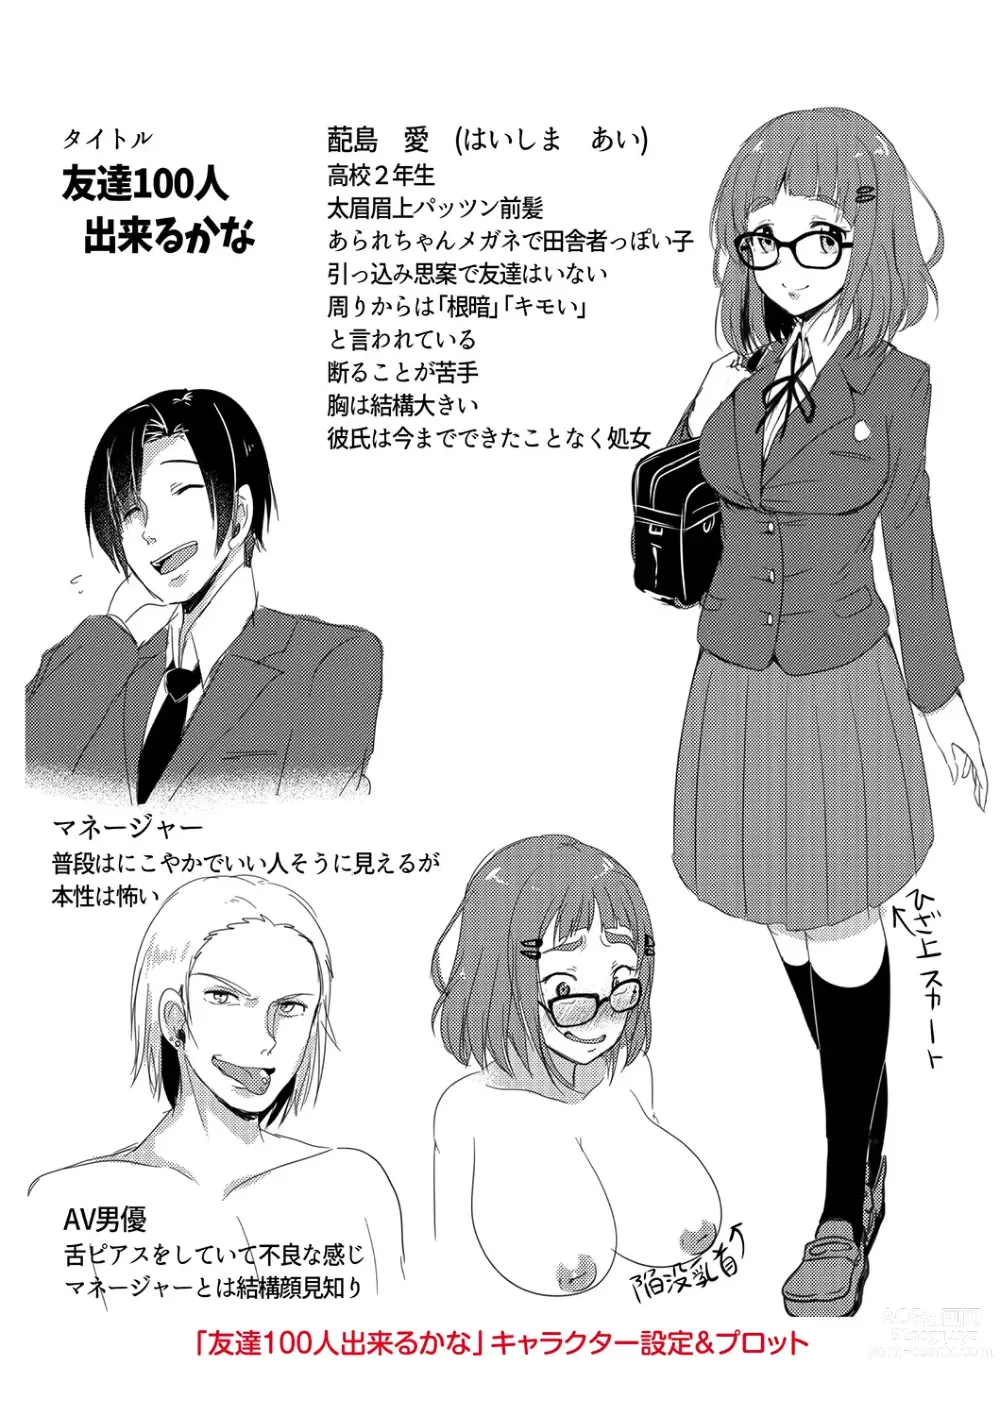 Page 216 of manga Kowashite Asobo + DLsite Gentei Chara Settei & Plot